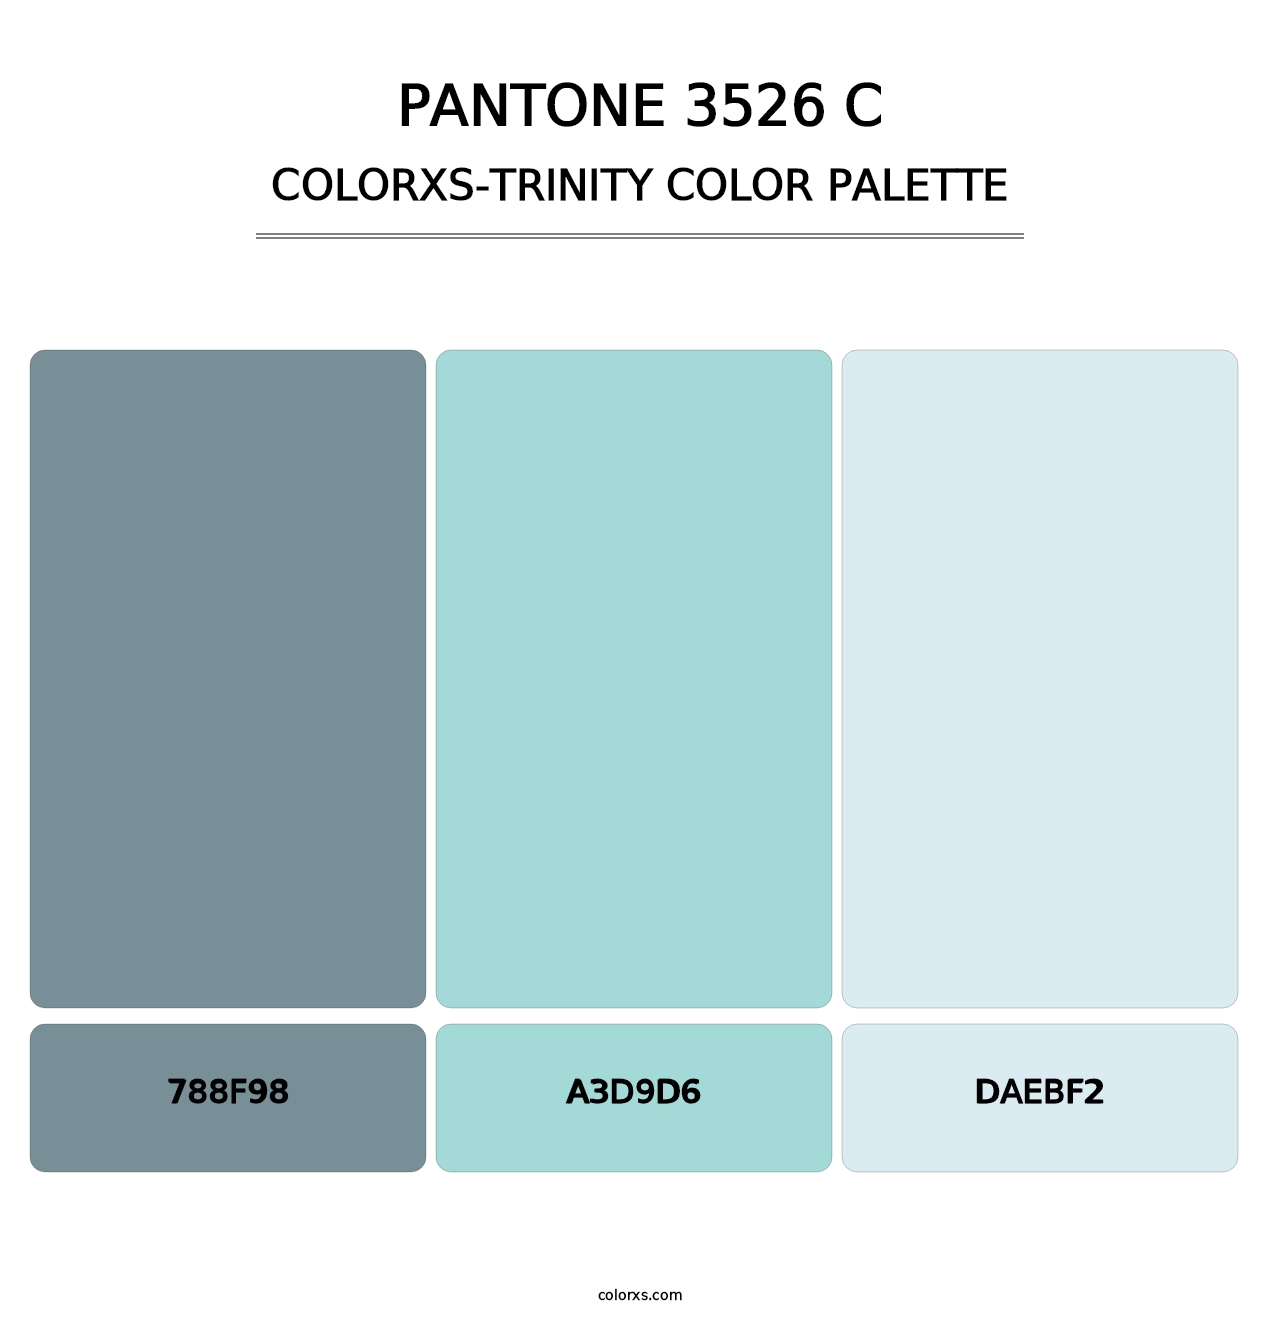 PANTONE 3526 C - Colorxs Trinity Palette